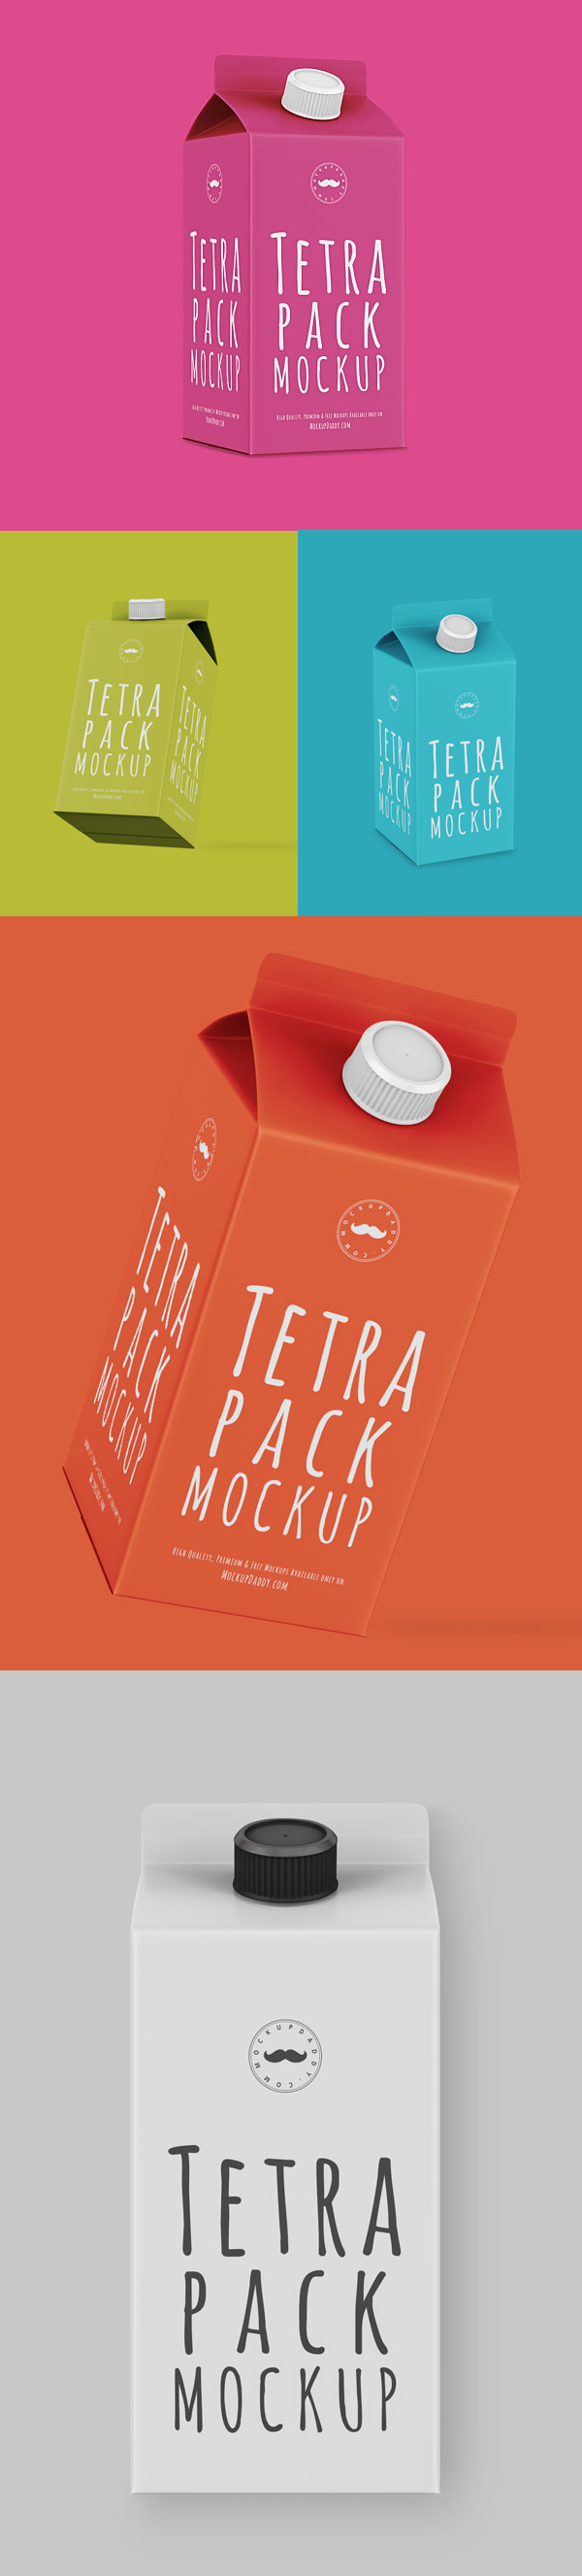 Free Tetra Pack Mockup PSD